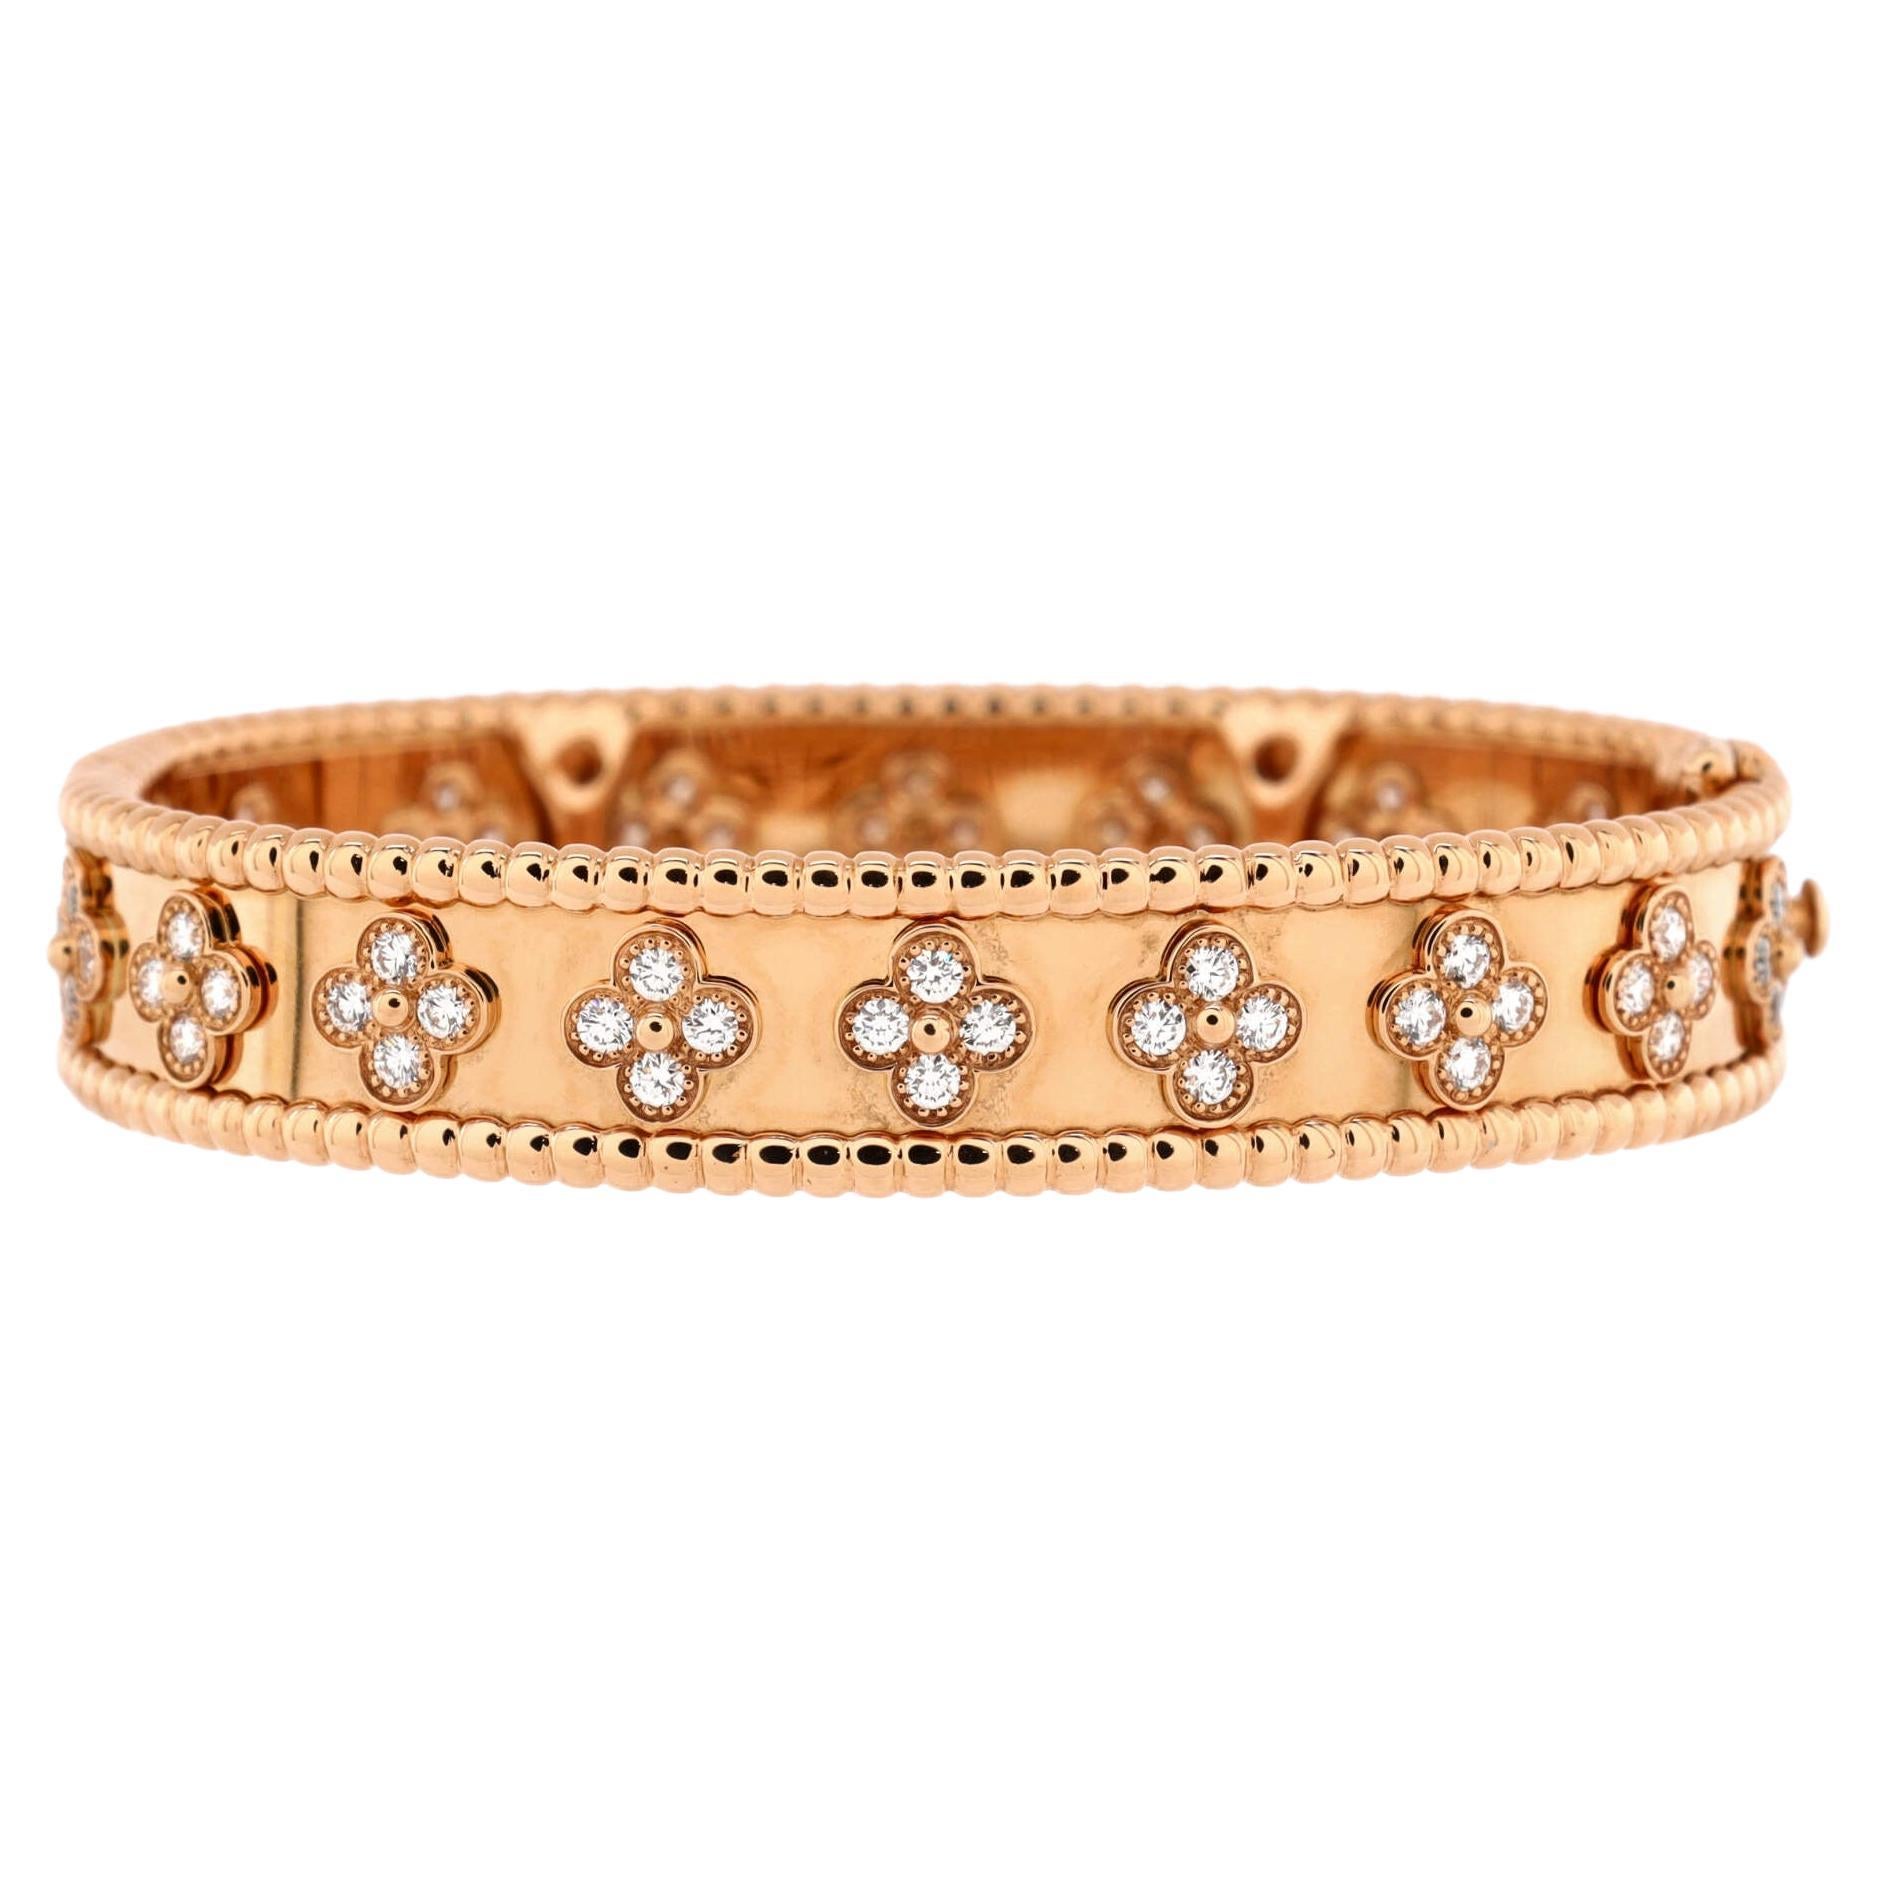 Van Cleef & Arpels Perlee Clovers Bracelet 18K Rose Gold with Diamonds